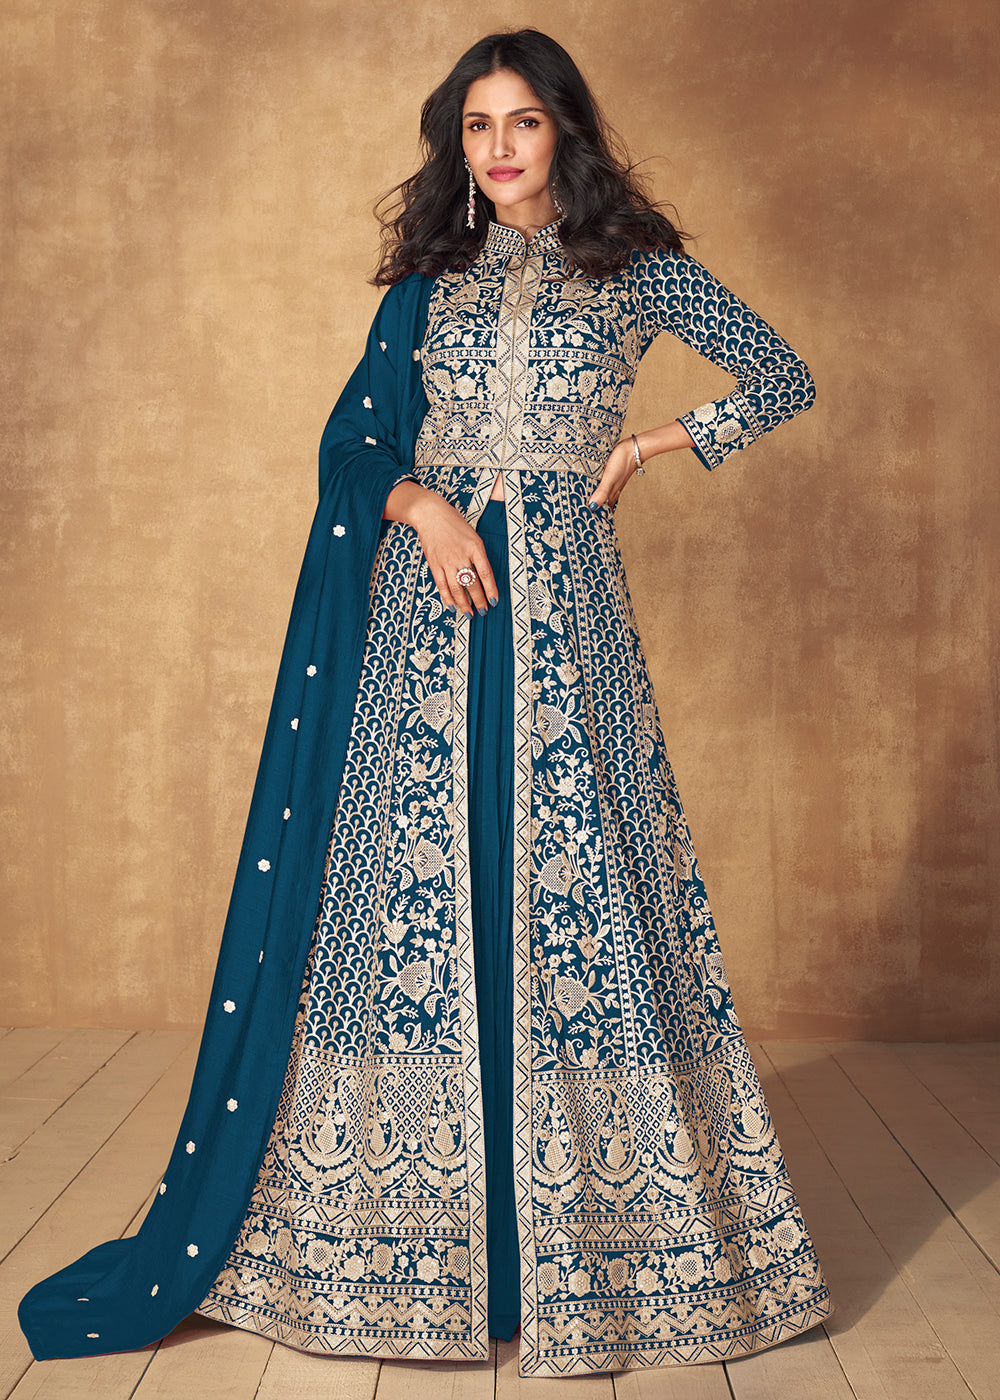 Buy Now Prussian Blue Slit Style Embroidered Lehenga Anarkali Suit Online in USA, UK, Australia, New Zealand, Canada & Worldwide at Empress Clothing.